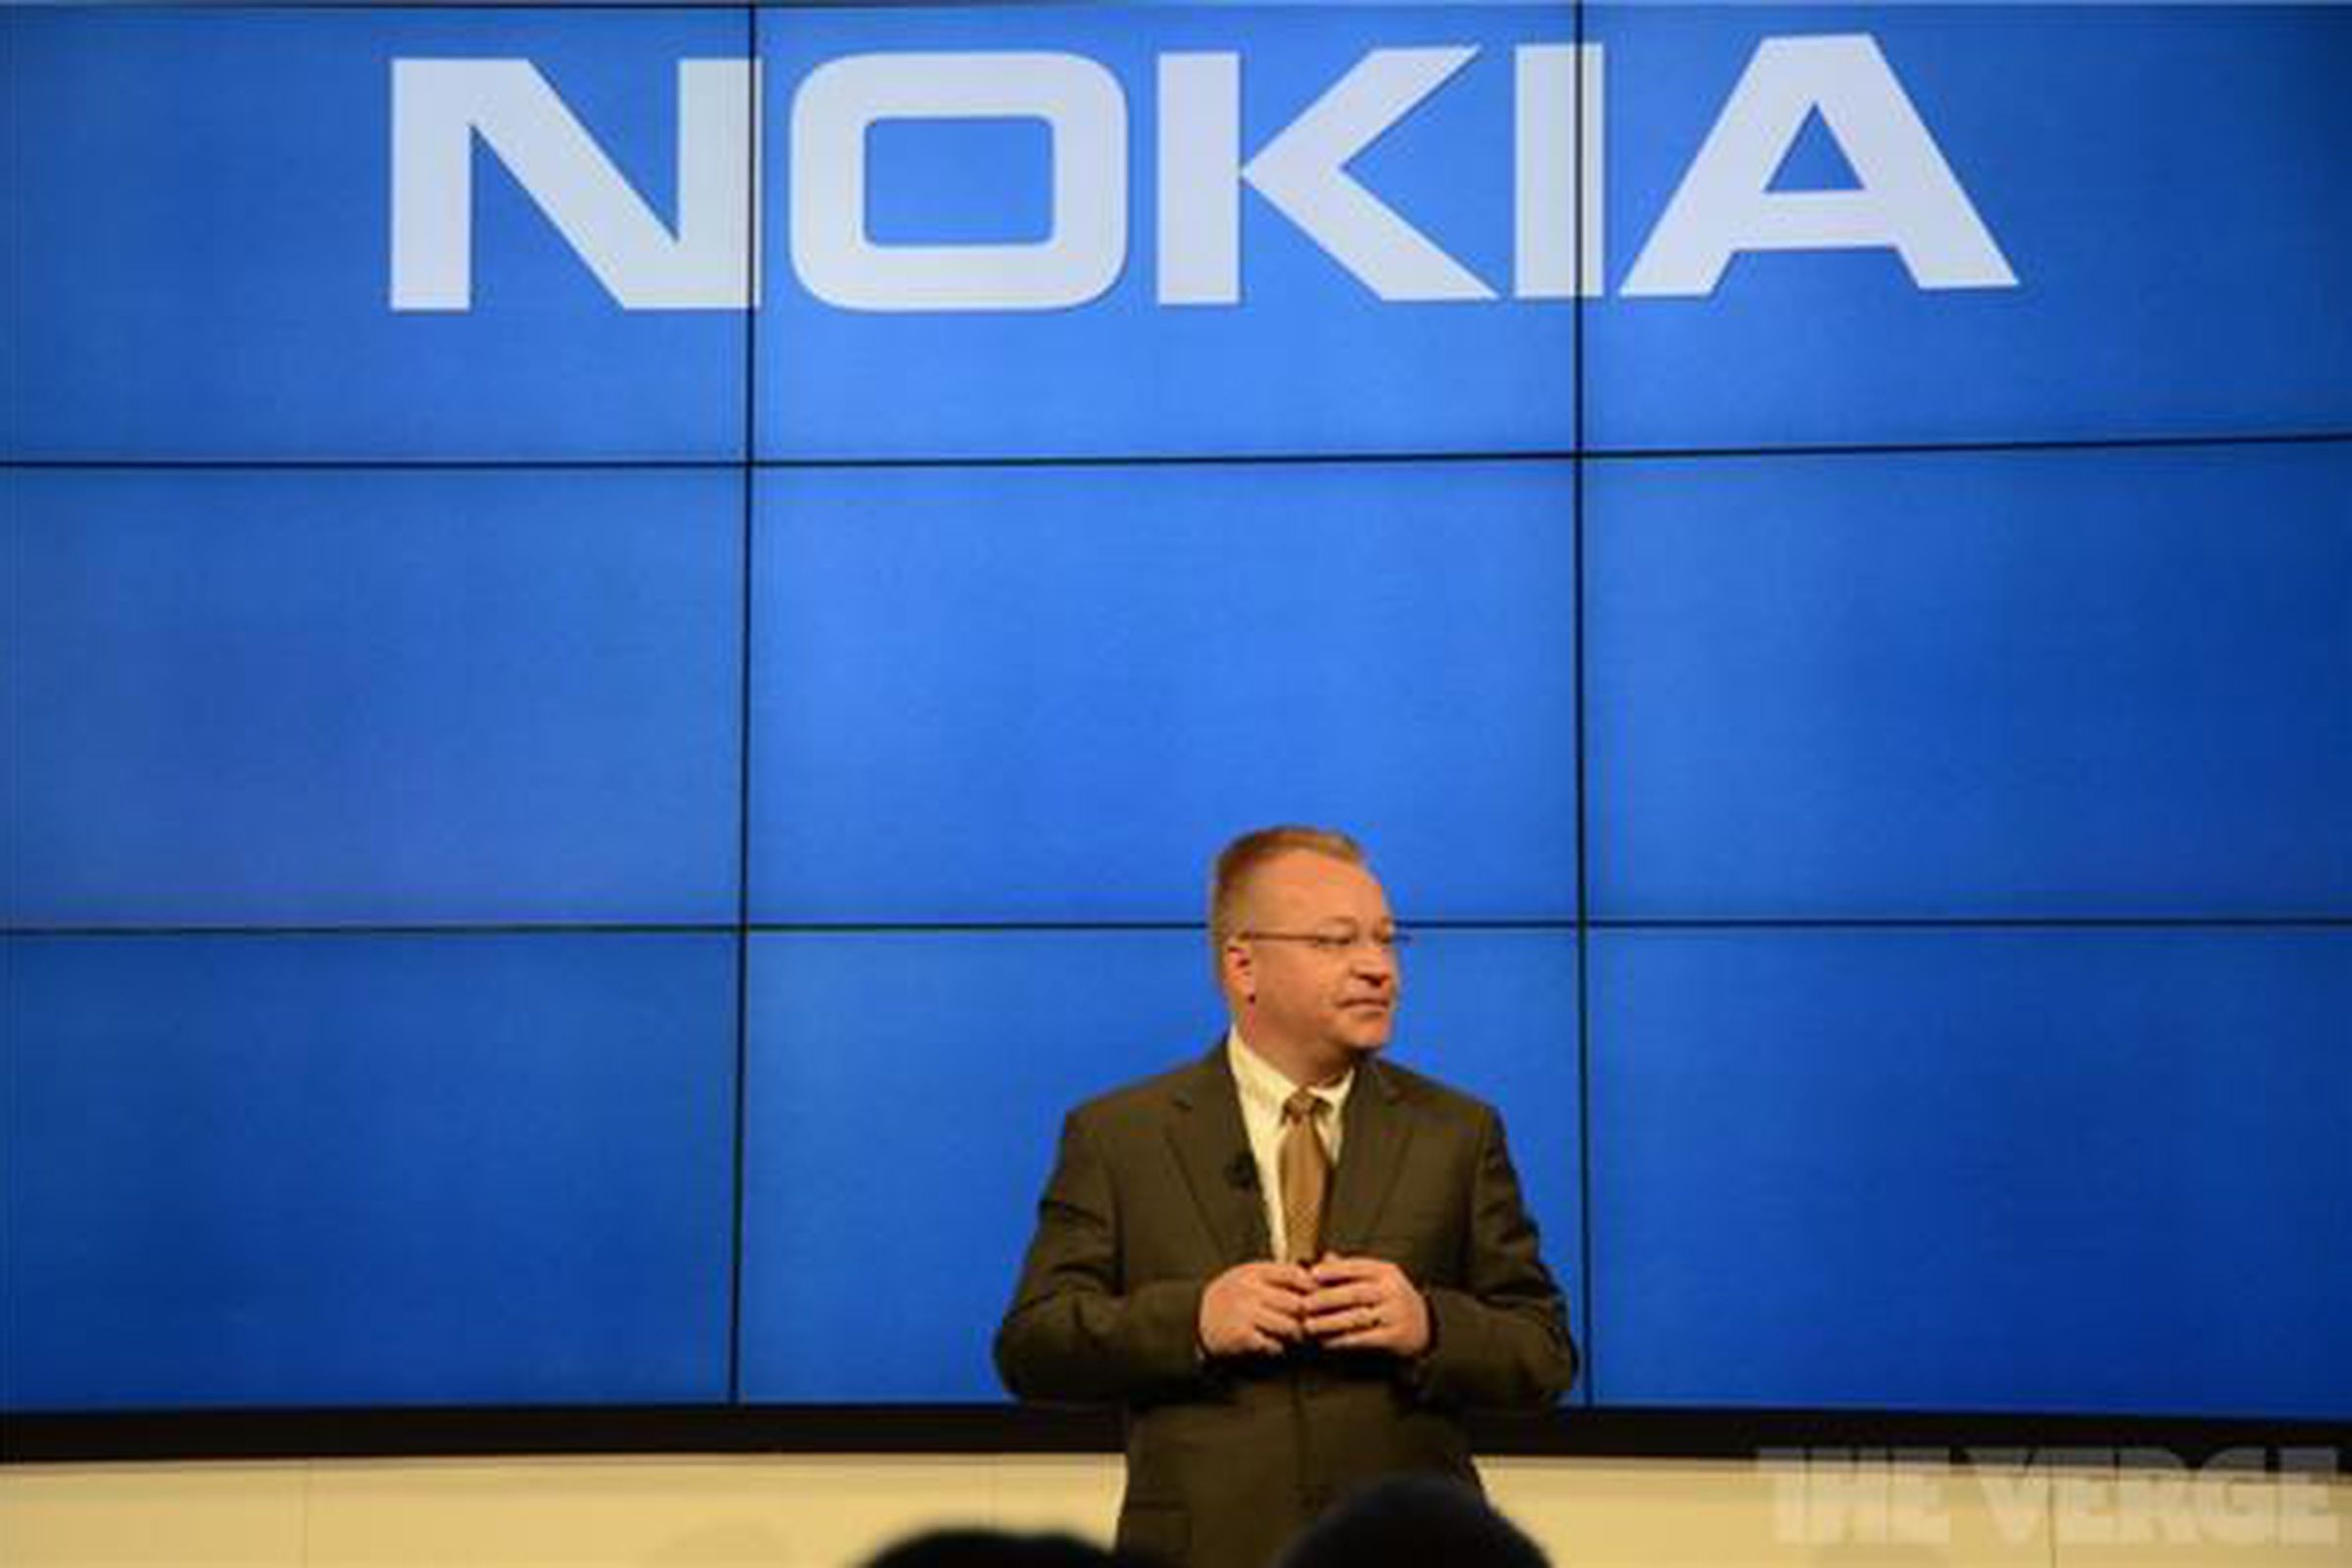 Nokia event MWC 2012